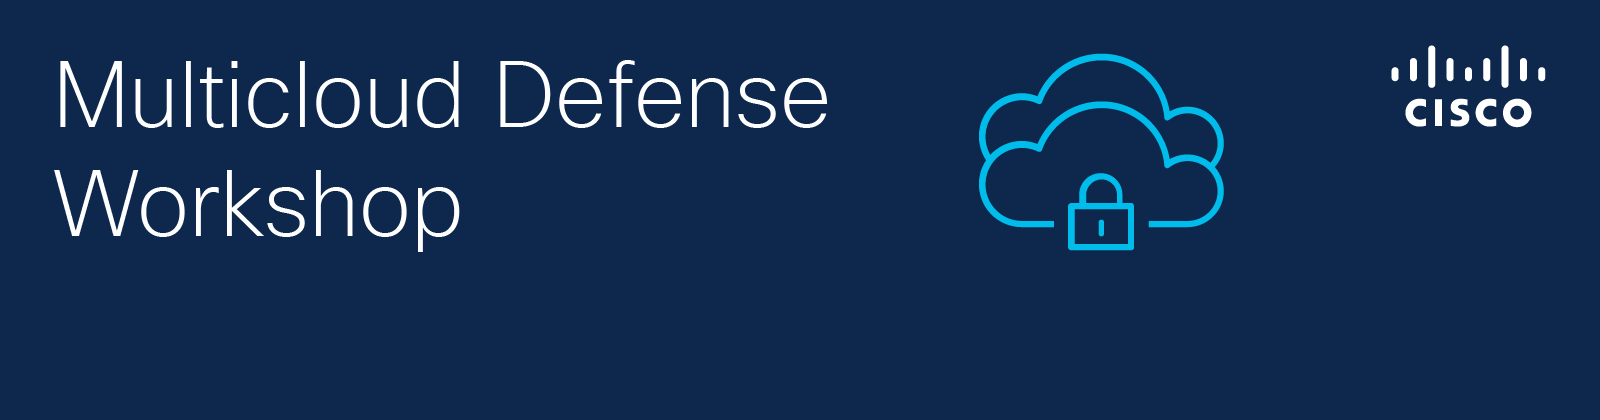 Multicloud Defense Workshop text and cisco logo